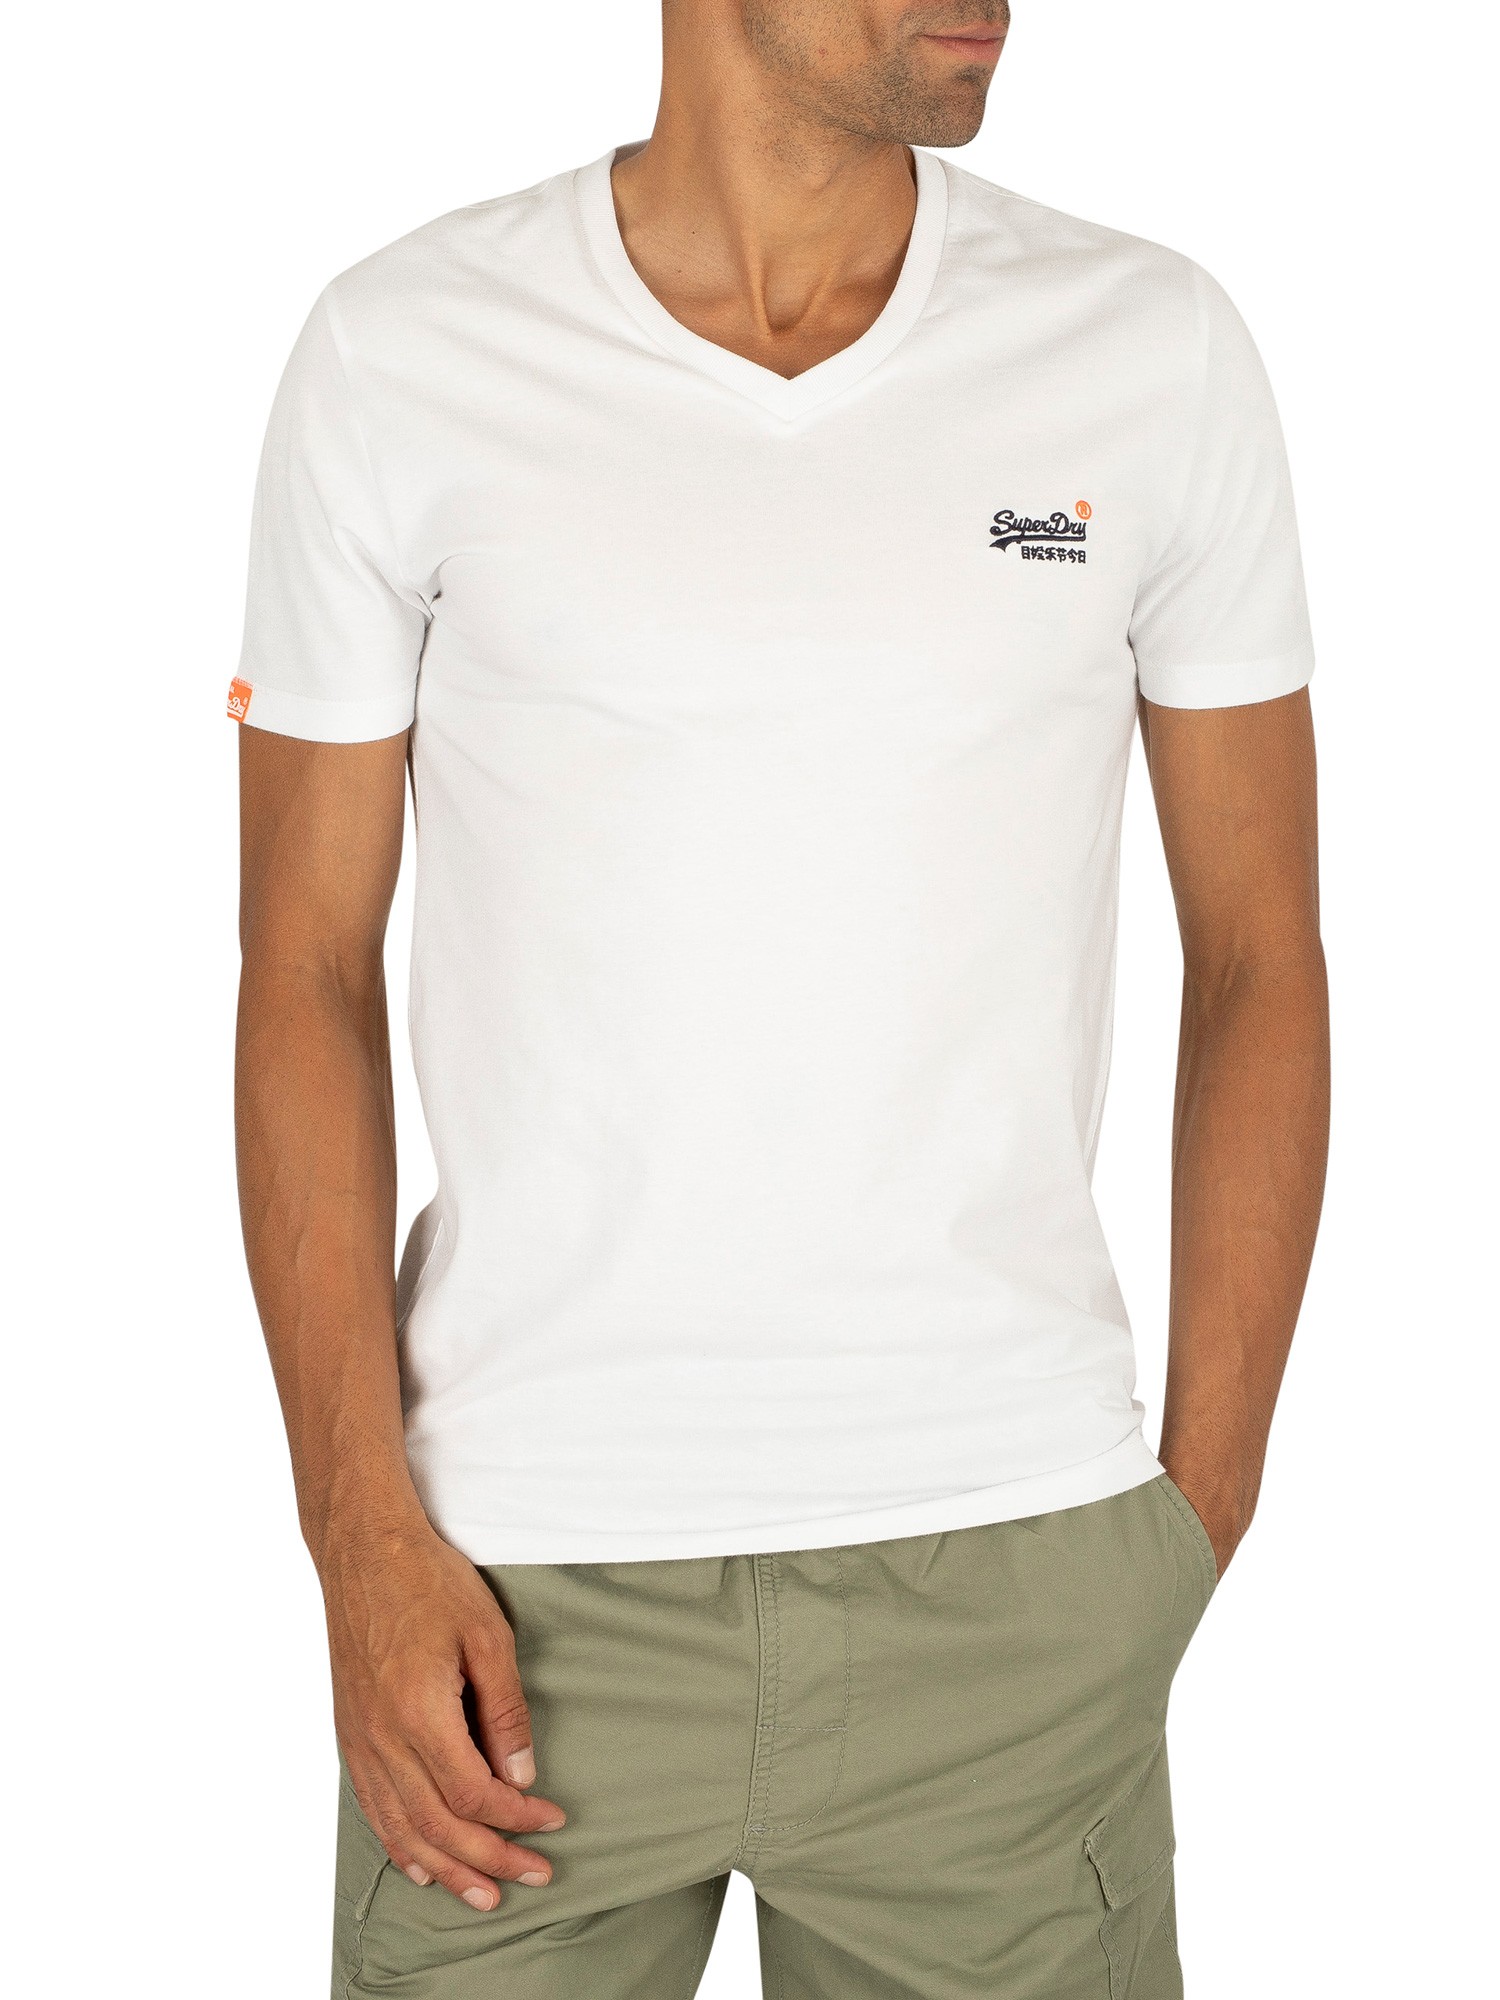 Homme Superdry Orange Label Vintage Logo Tee T Shirt à Manches Courtes Blanc QL Emb